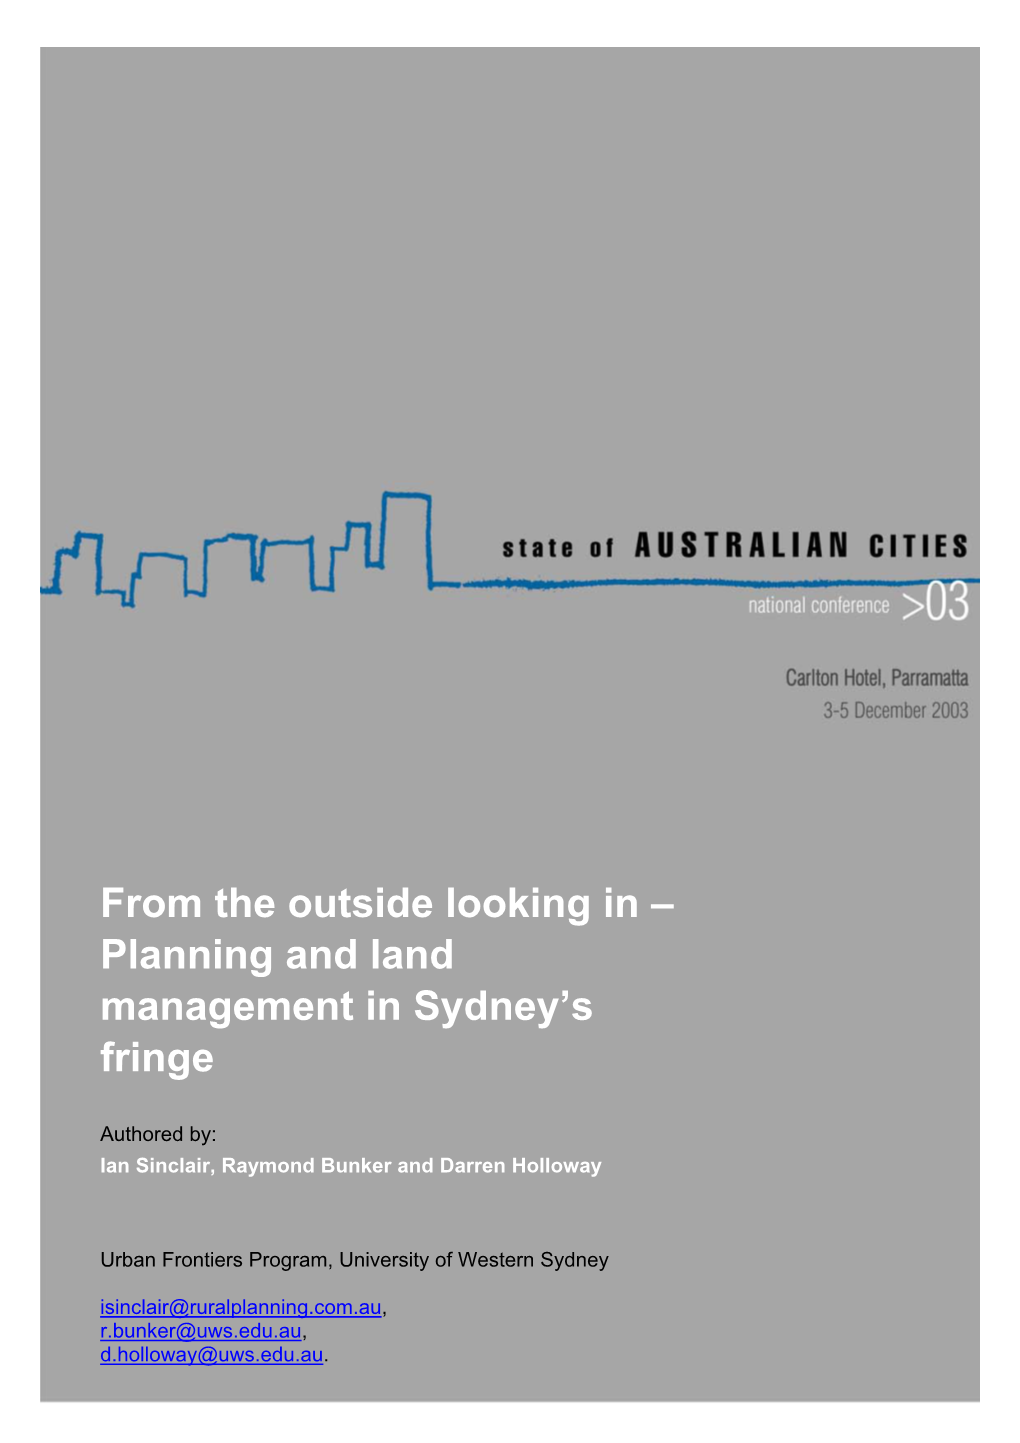 Planning and Land Management in Sydney's Fringe